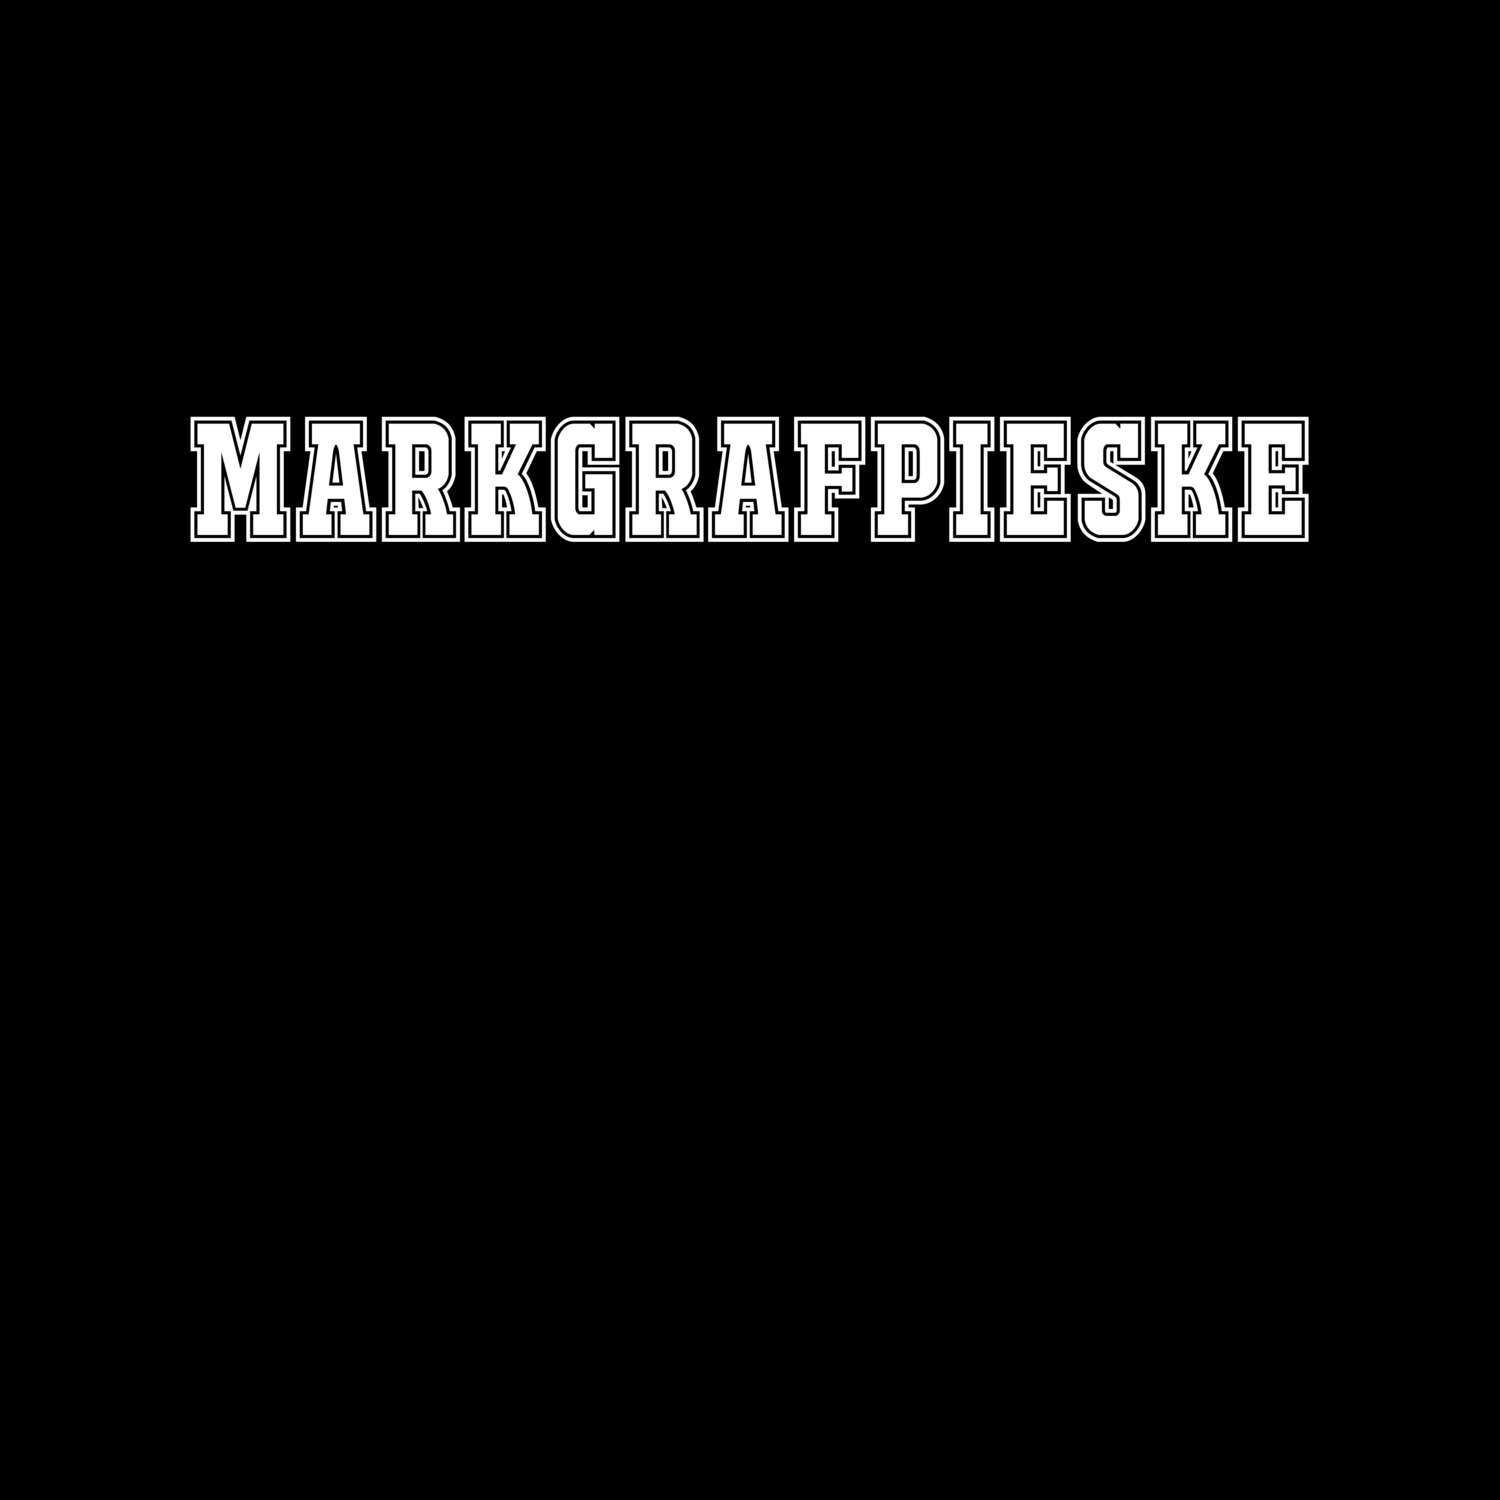 Markgrafpieske T-Shirt »Classic«